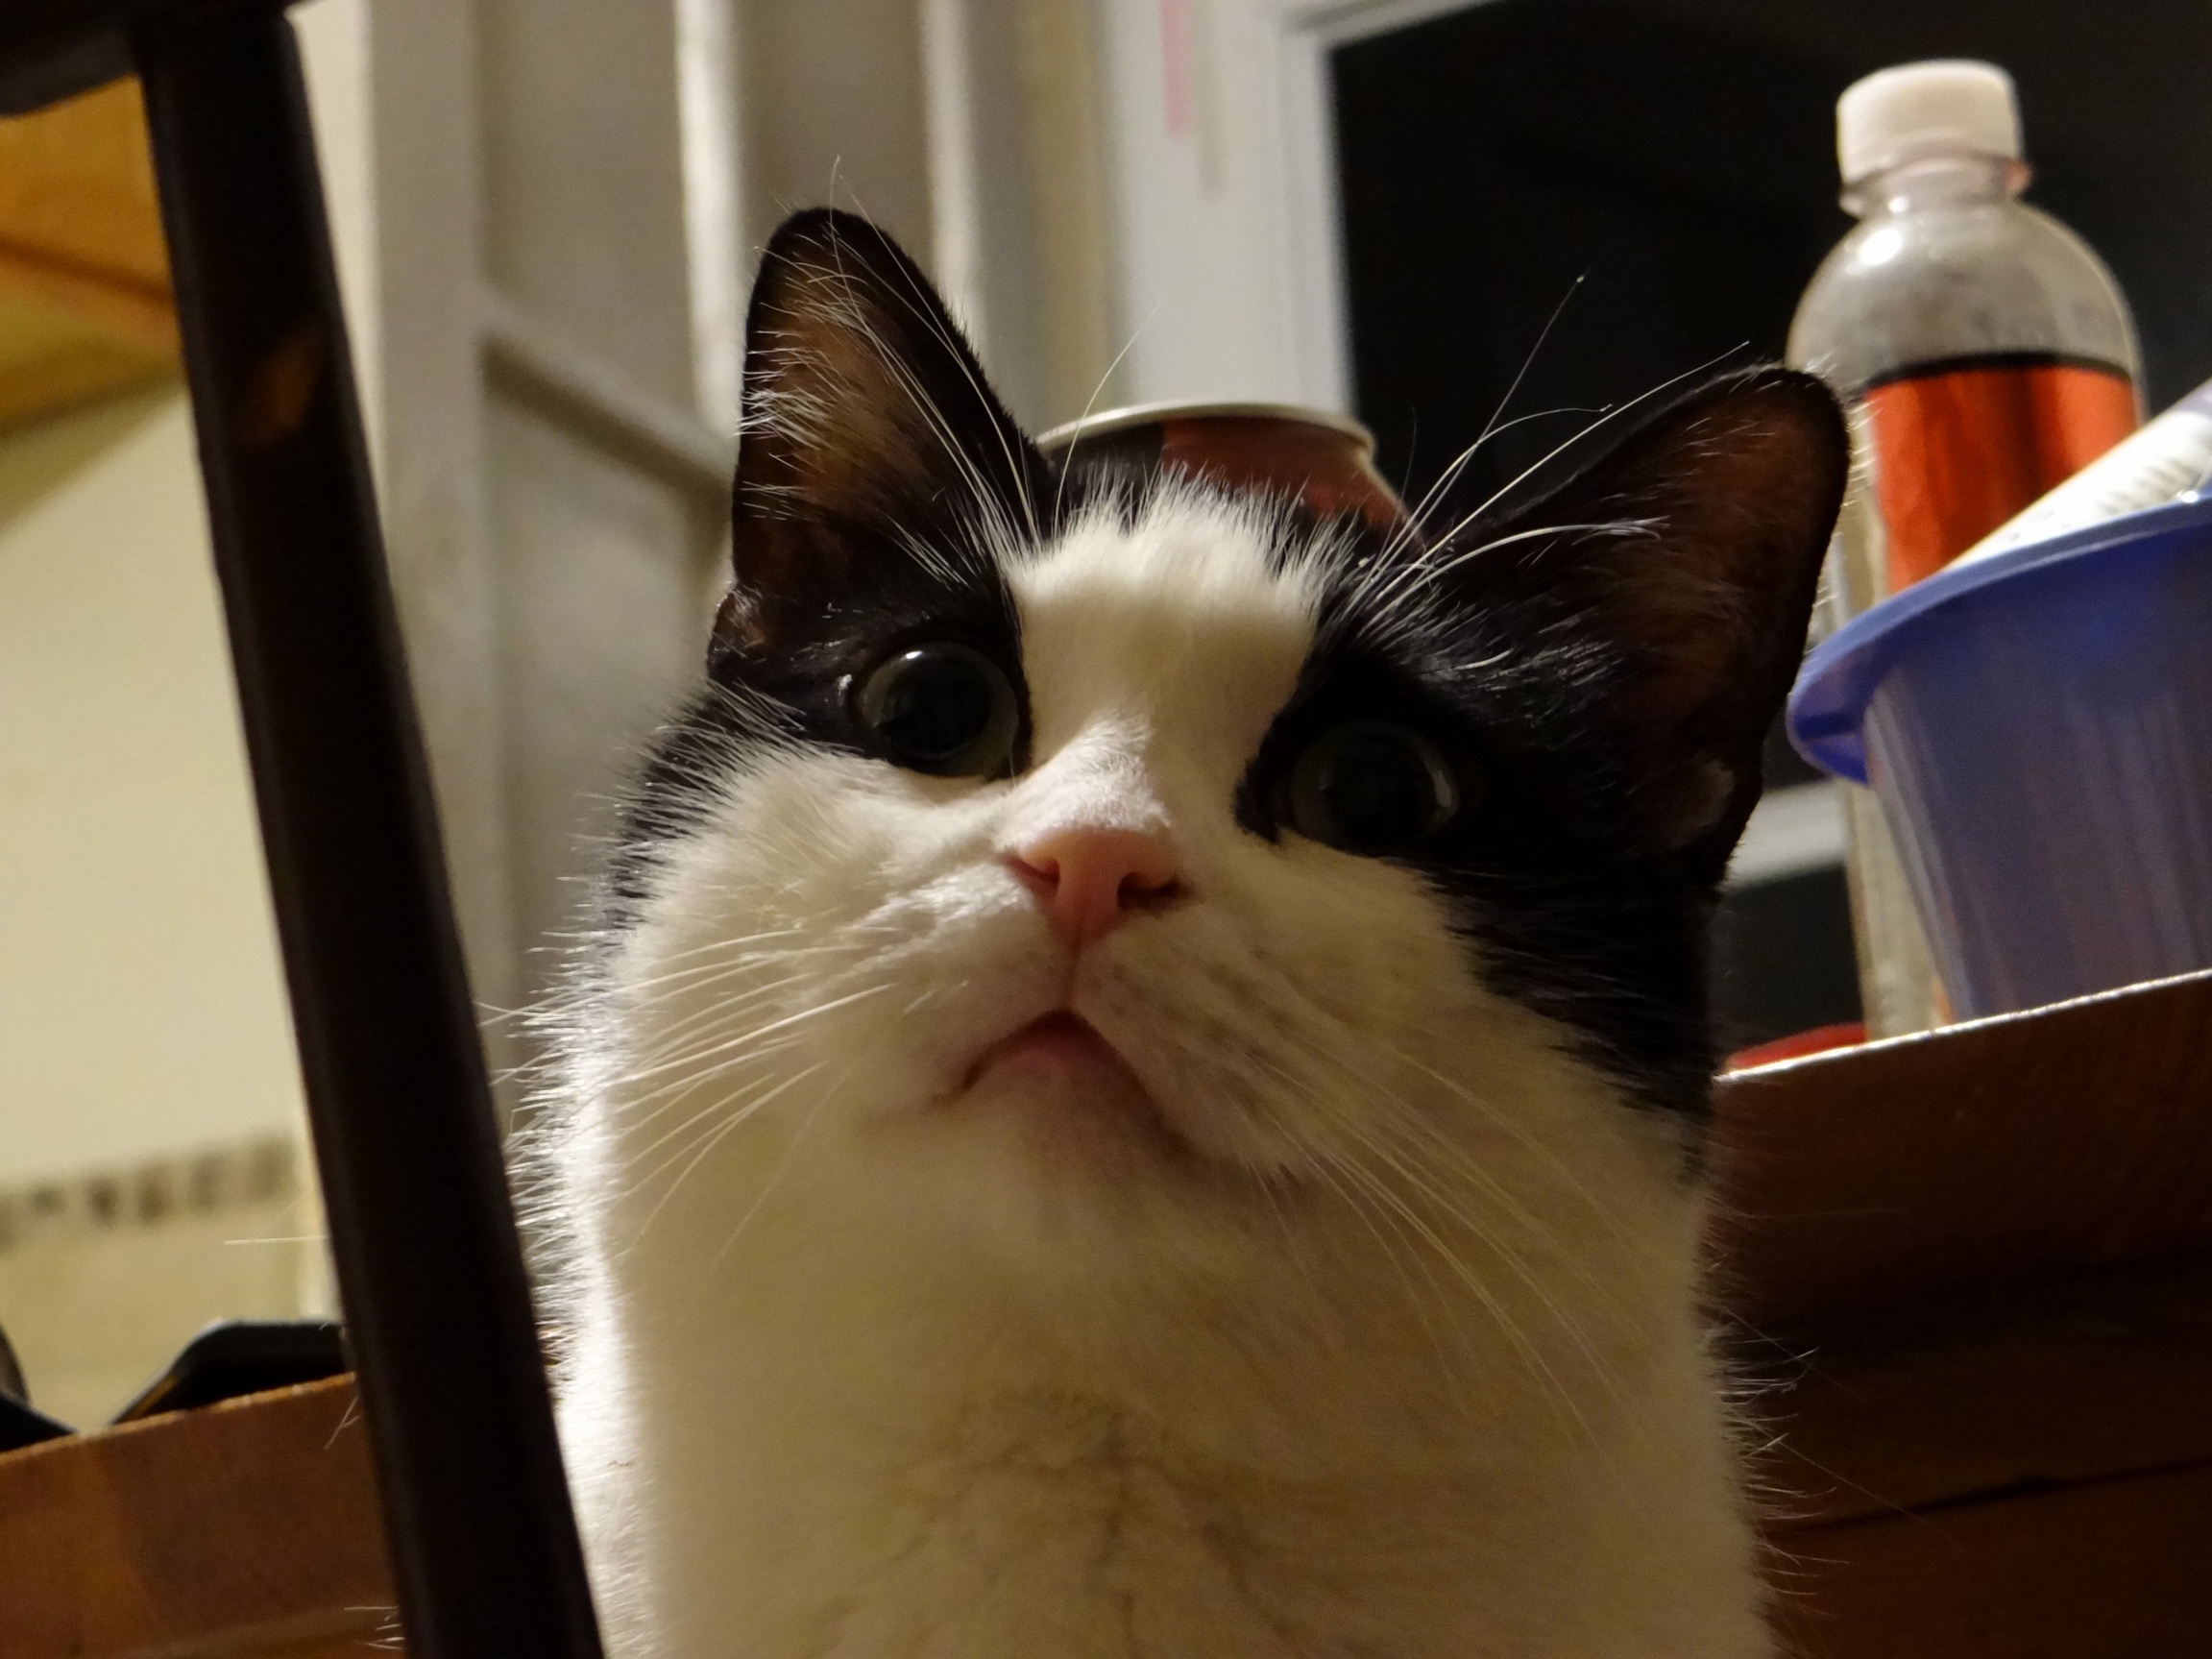 His face when he hears catnip.